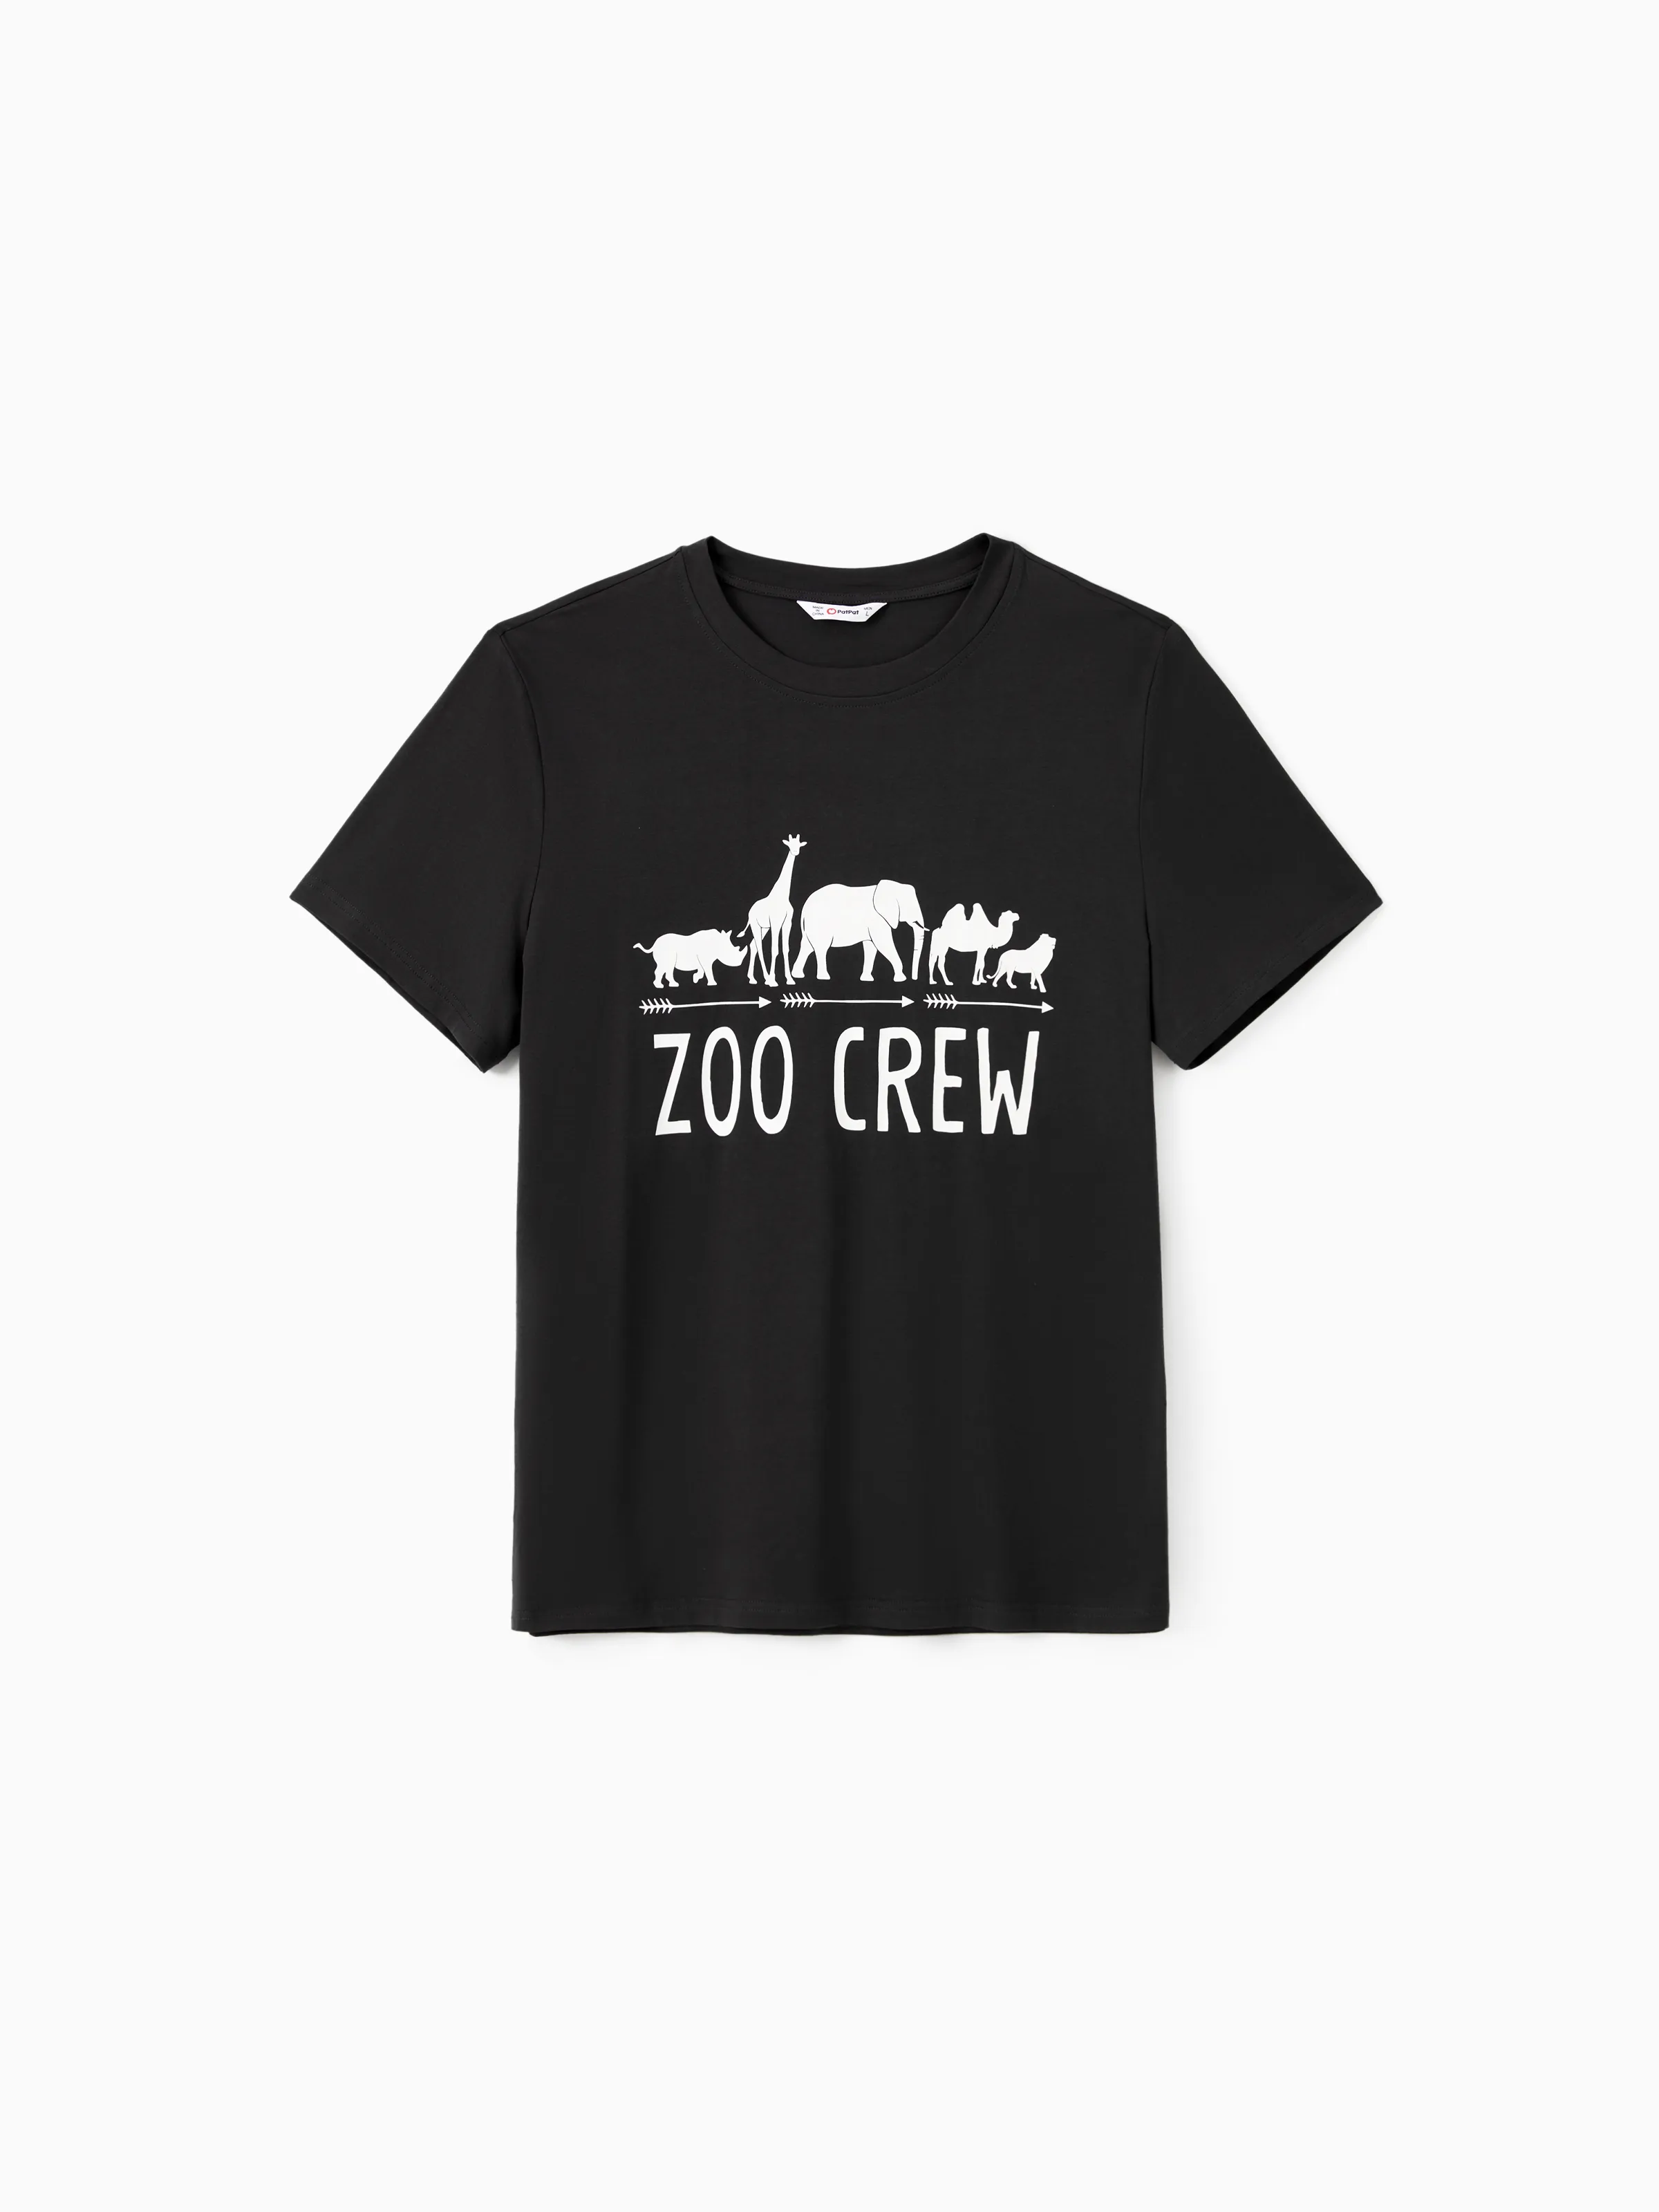 

Family Matching Cotton Short Sleeves Round Neck Animal Theme Zoo Crew Graphic Tee